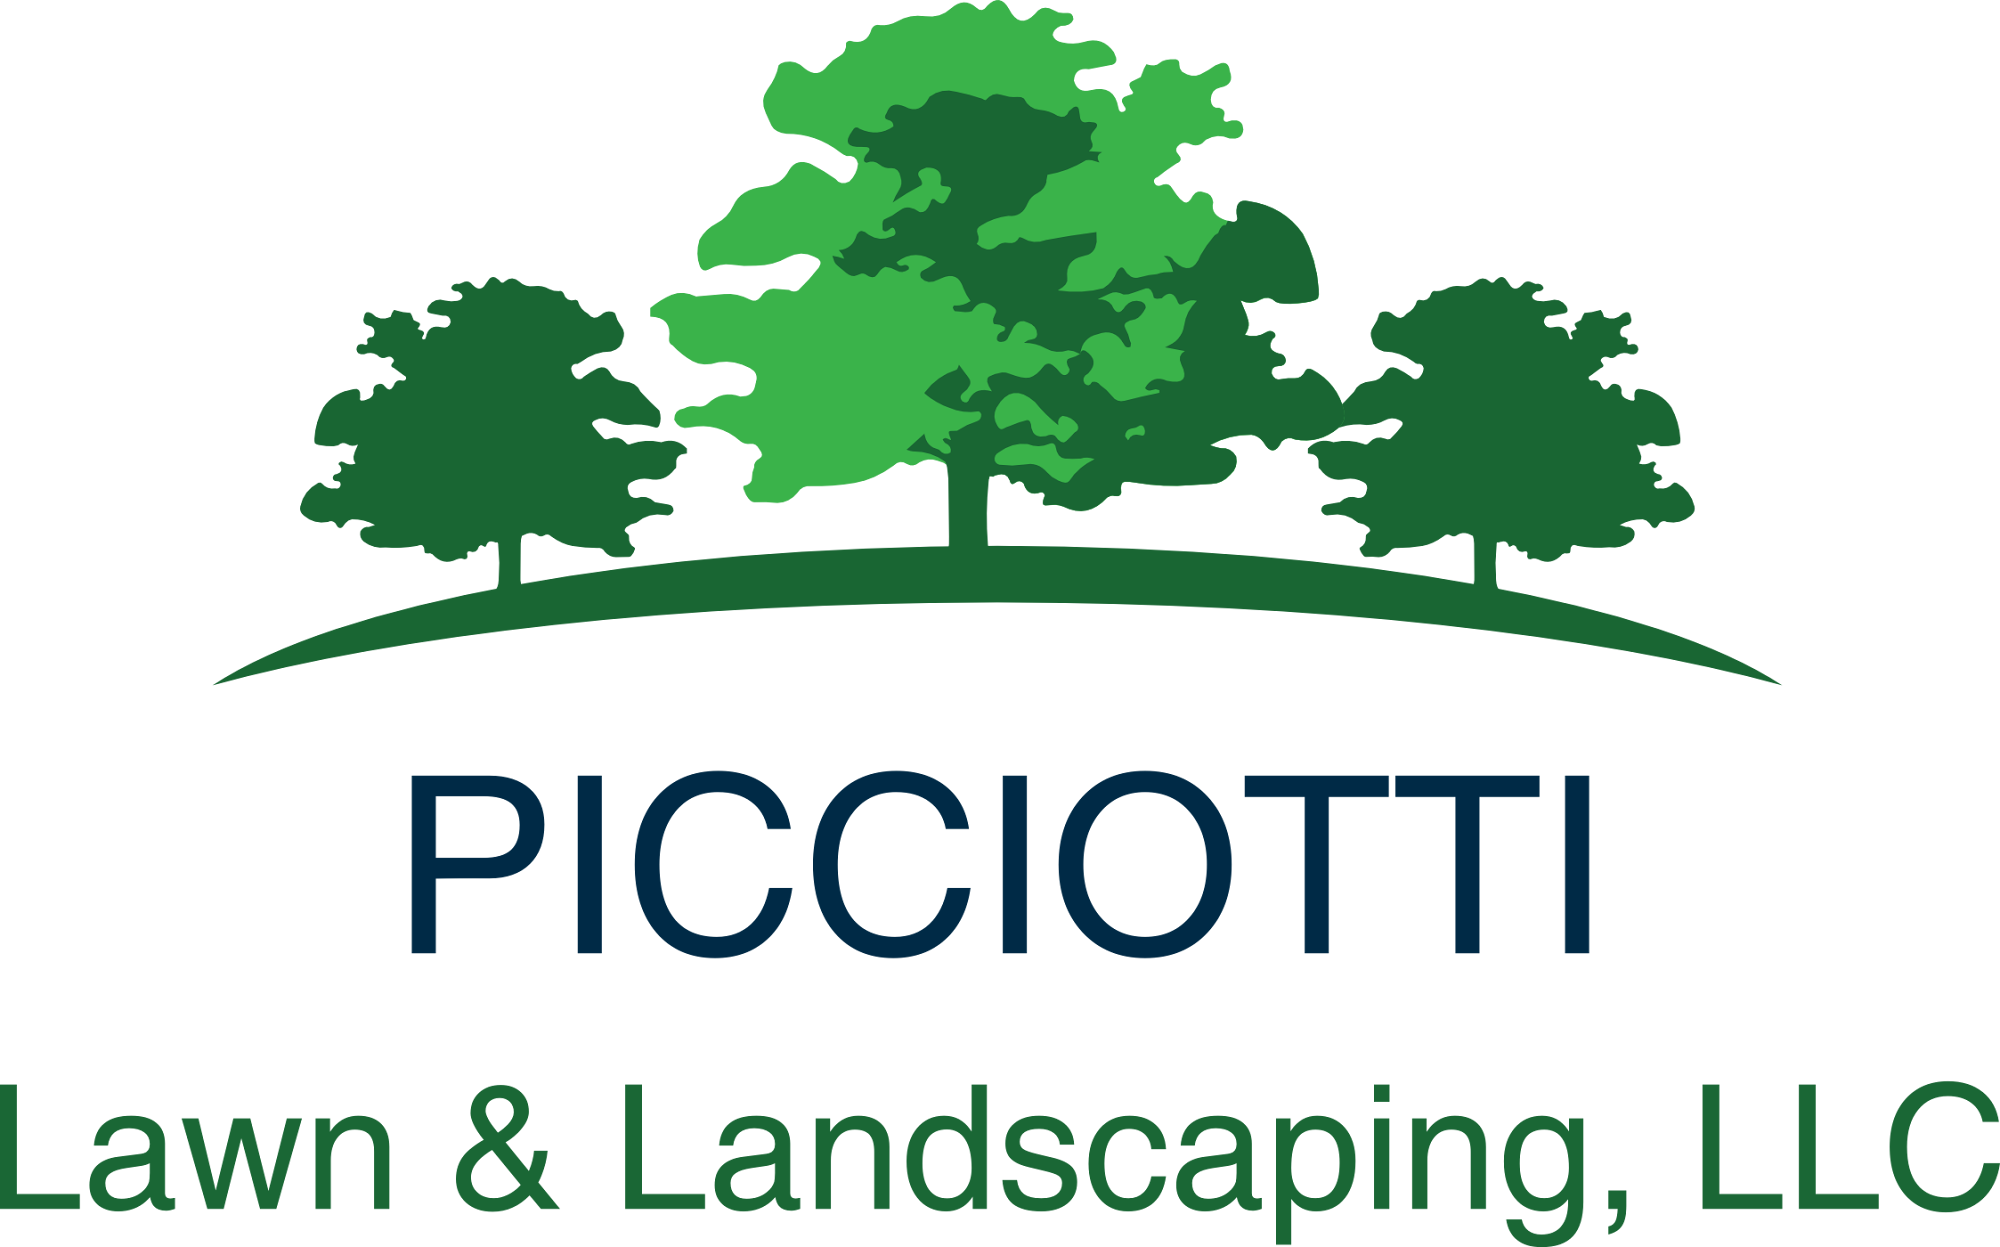 Picciotti Lawn & Landscaping, LLC